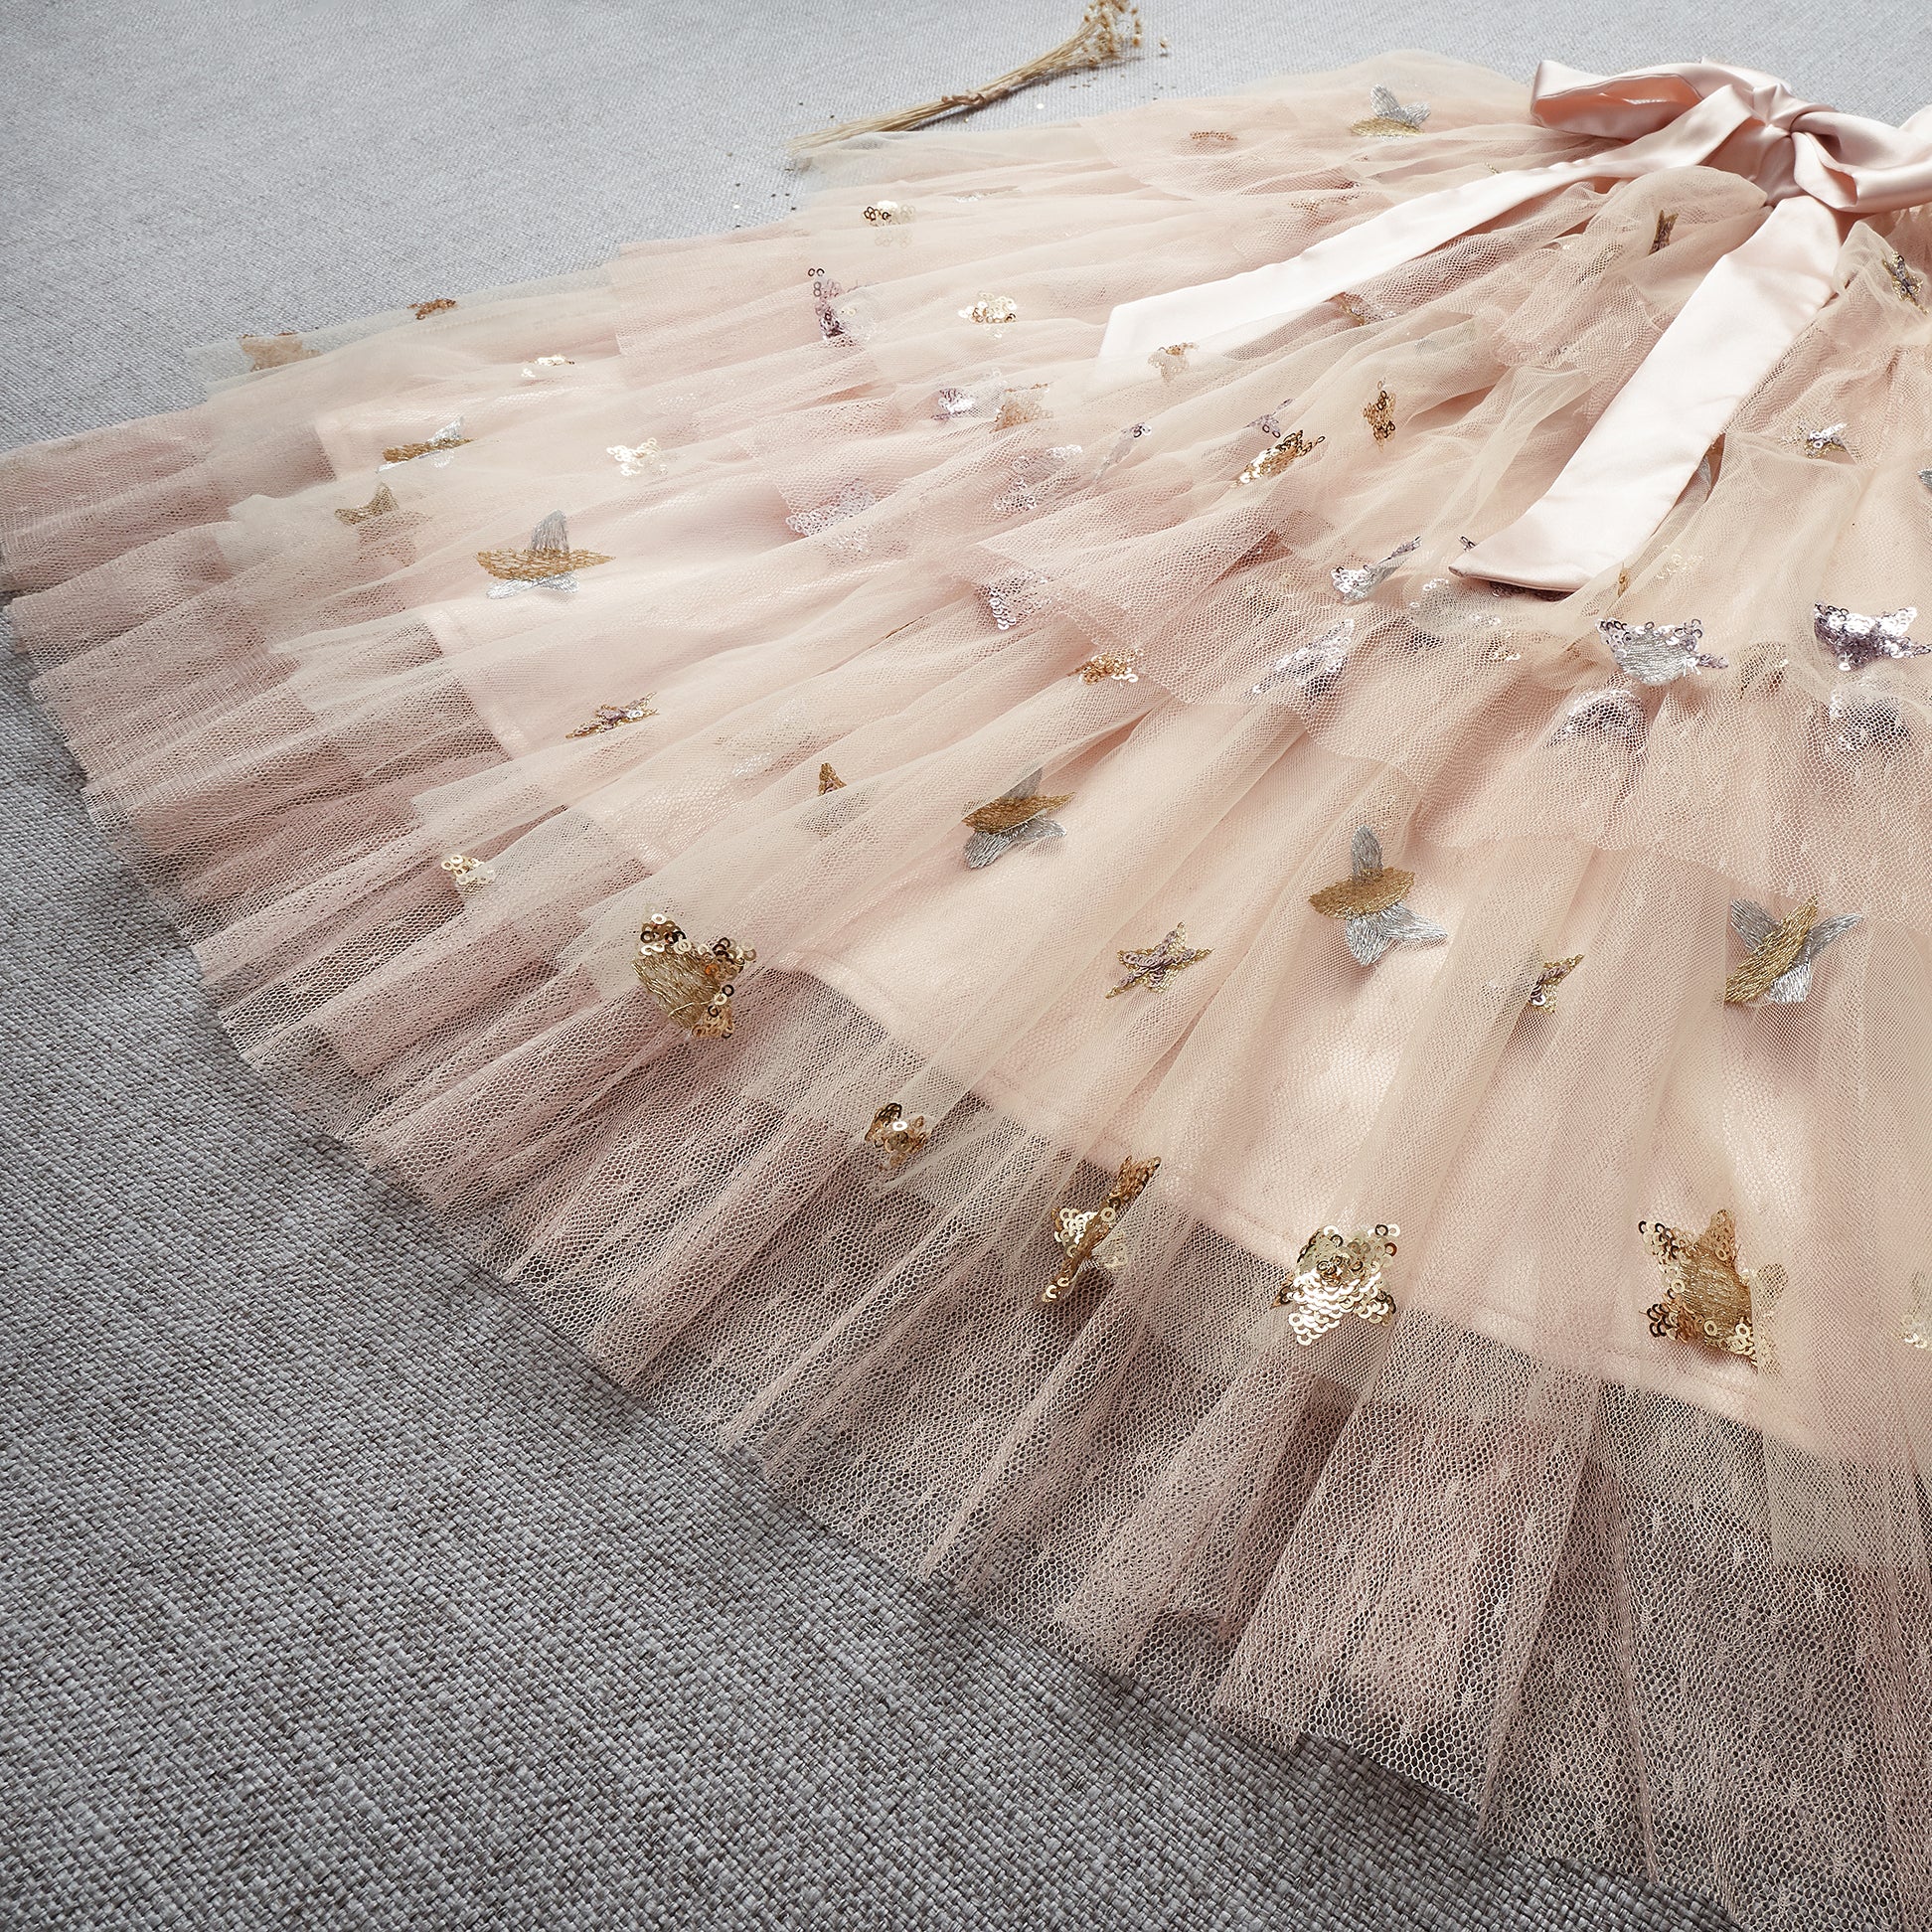 Velour Ballerina Dress - Mistletoe (FINAL SALE)